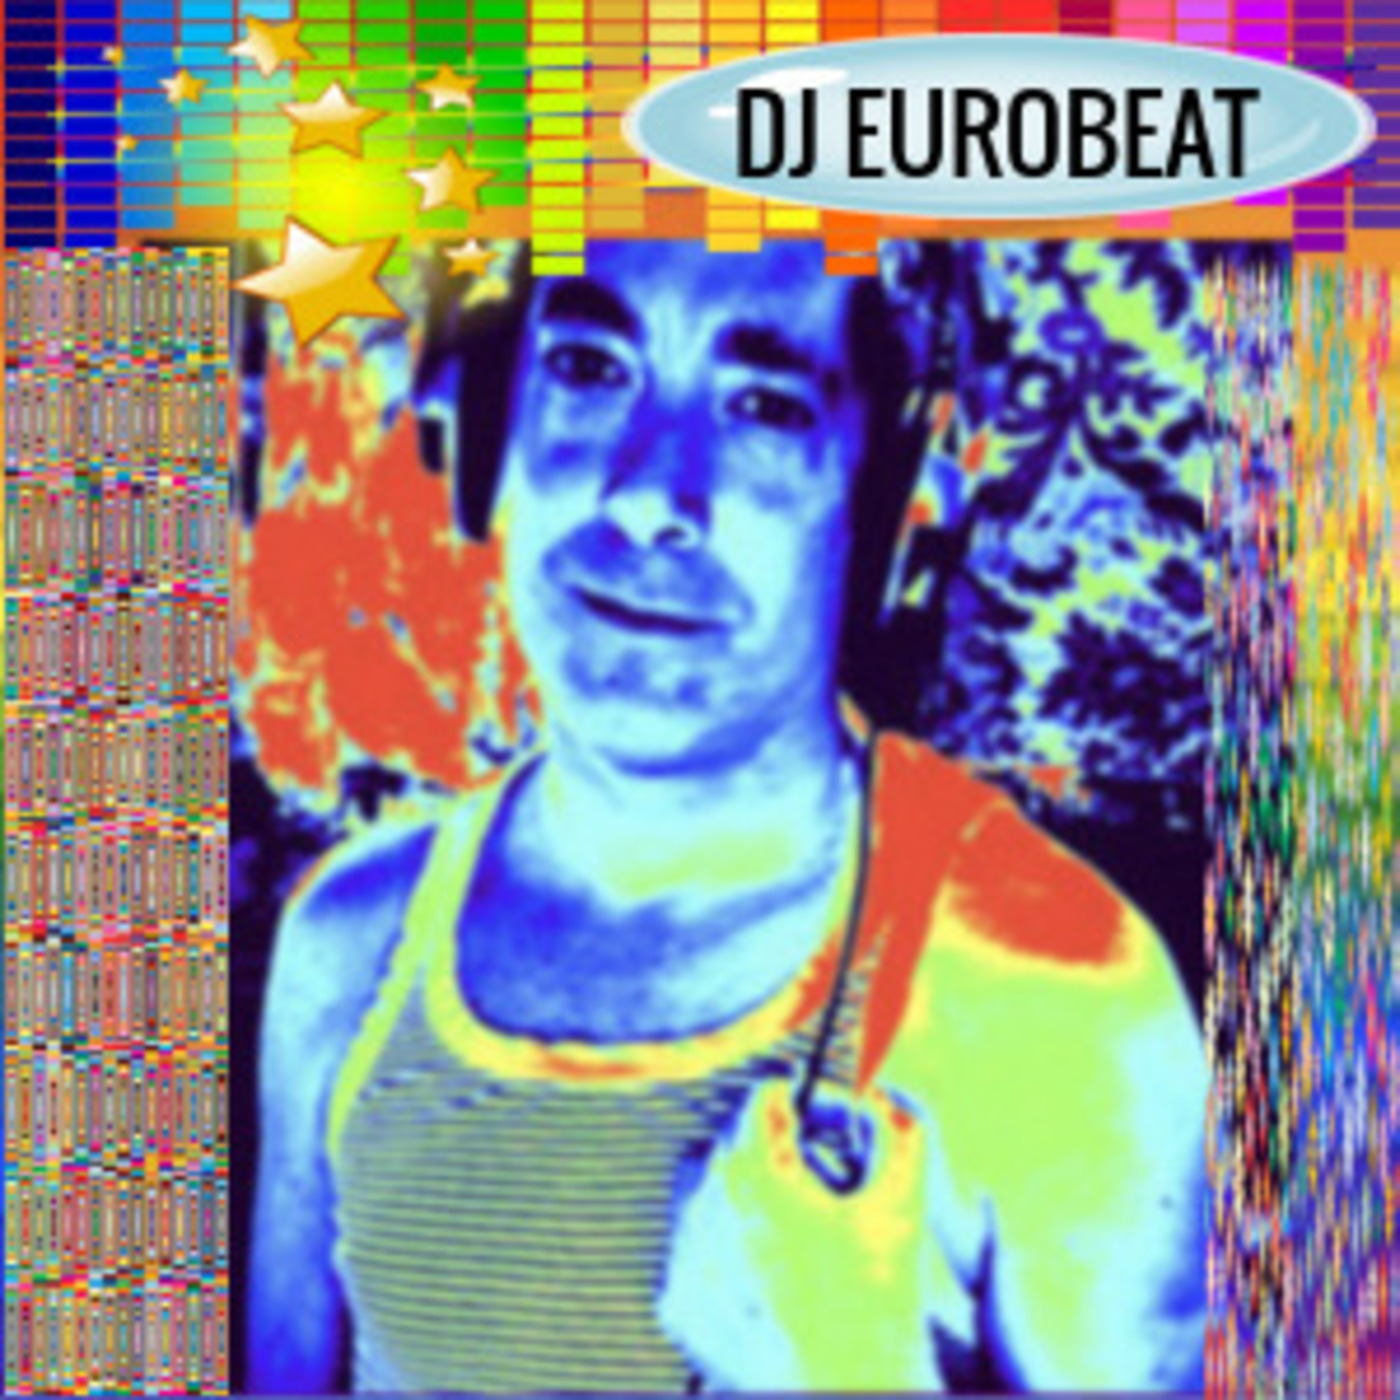 Podcast DJ EUROBEAT ©™